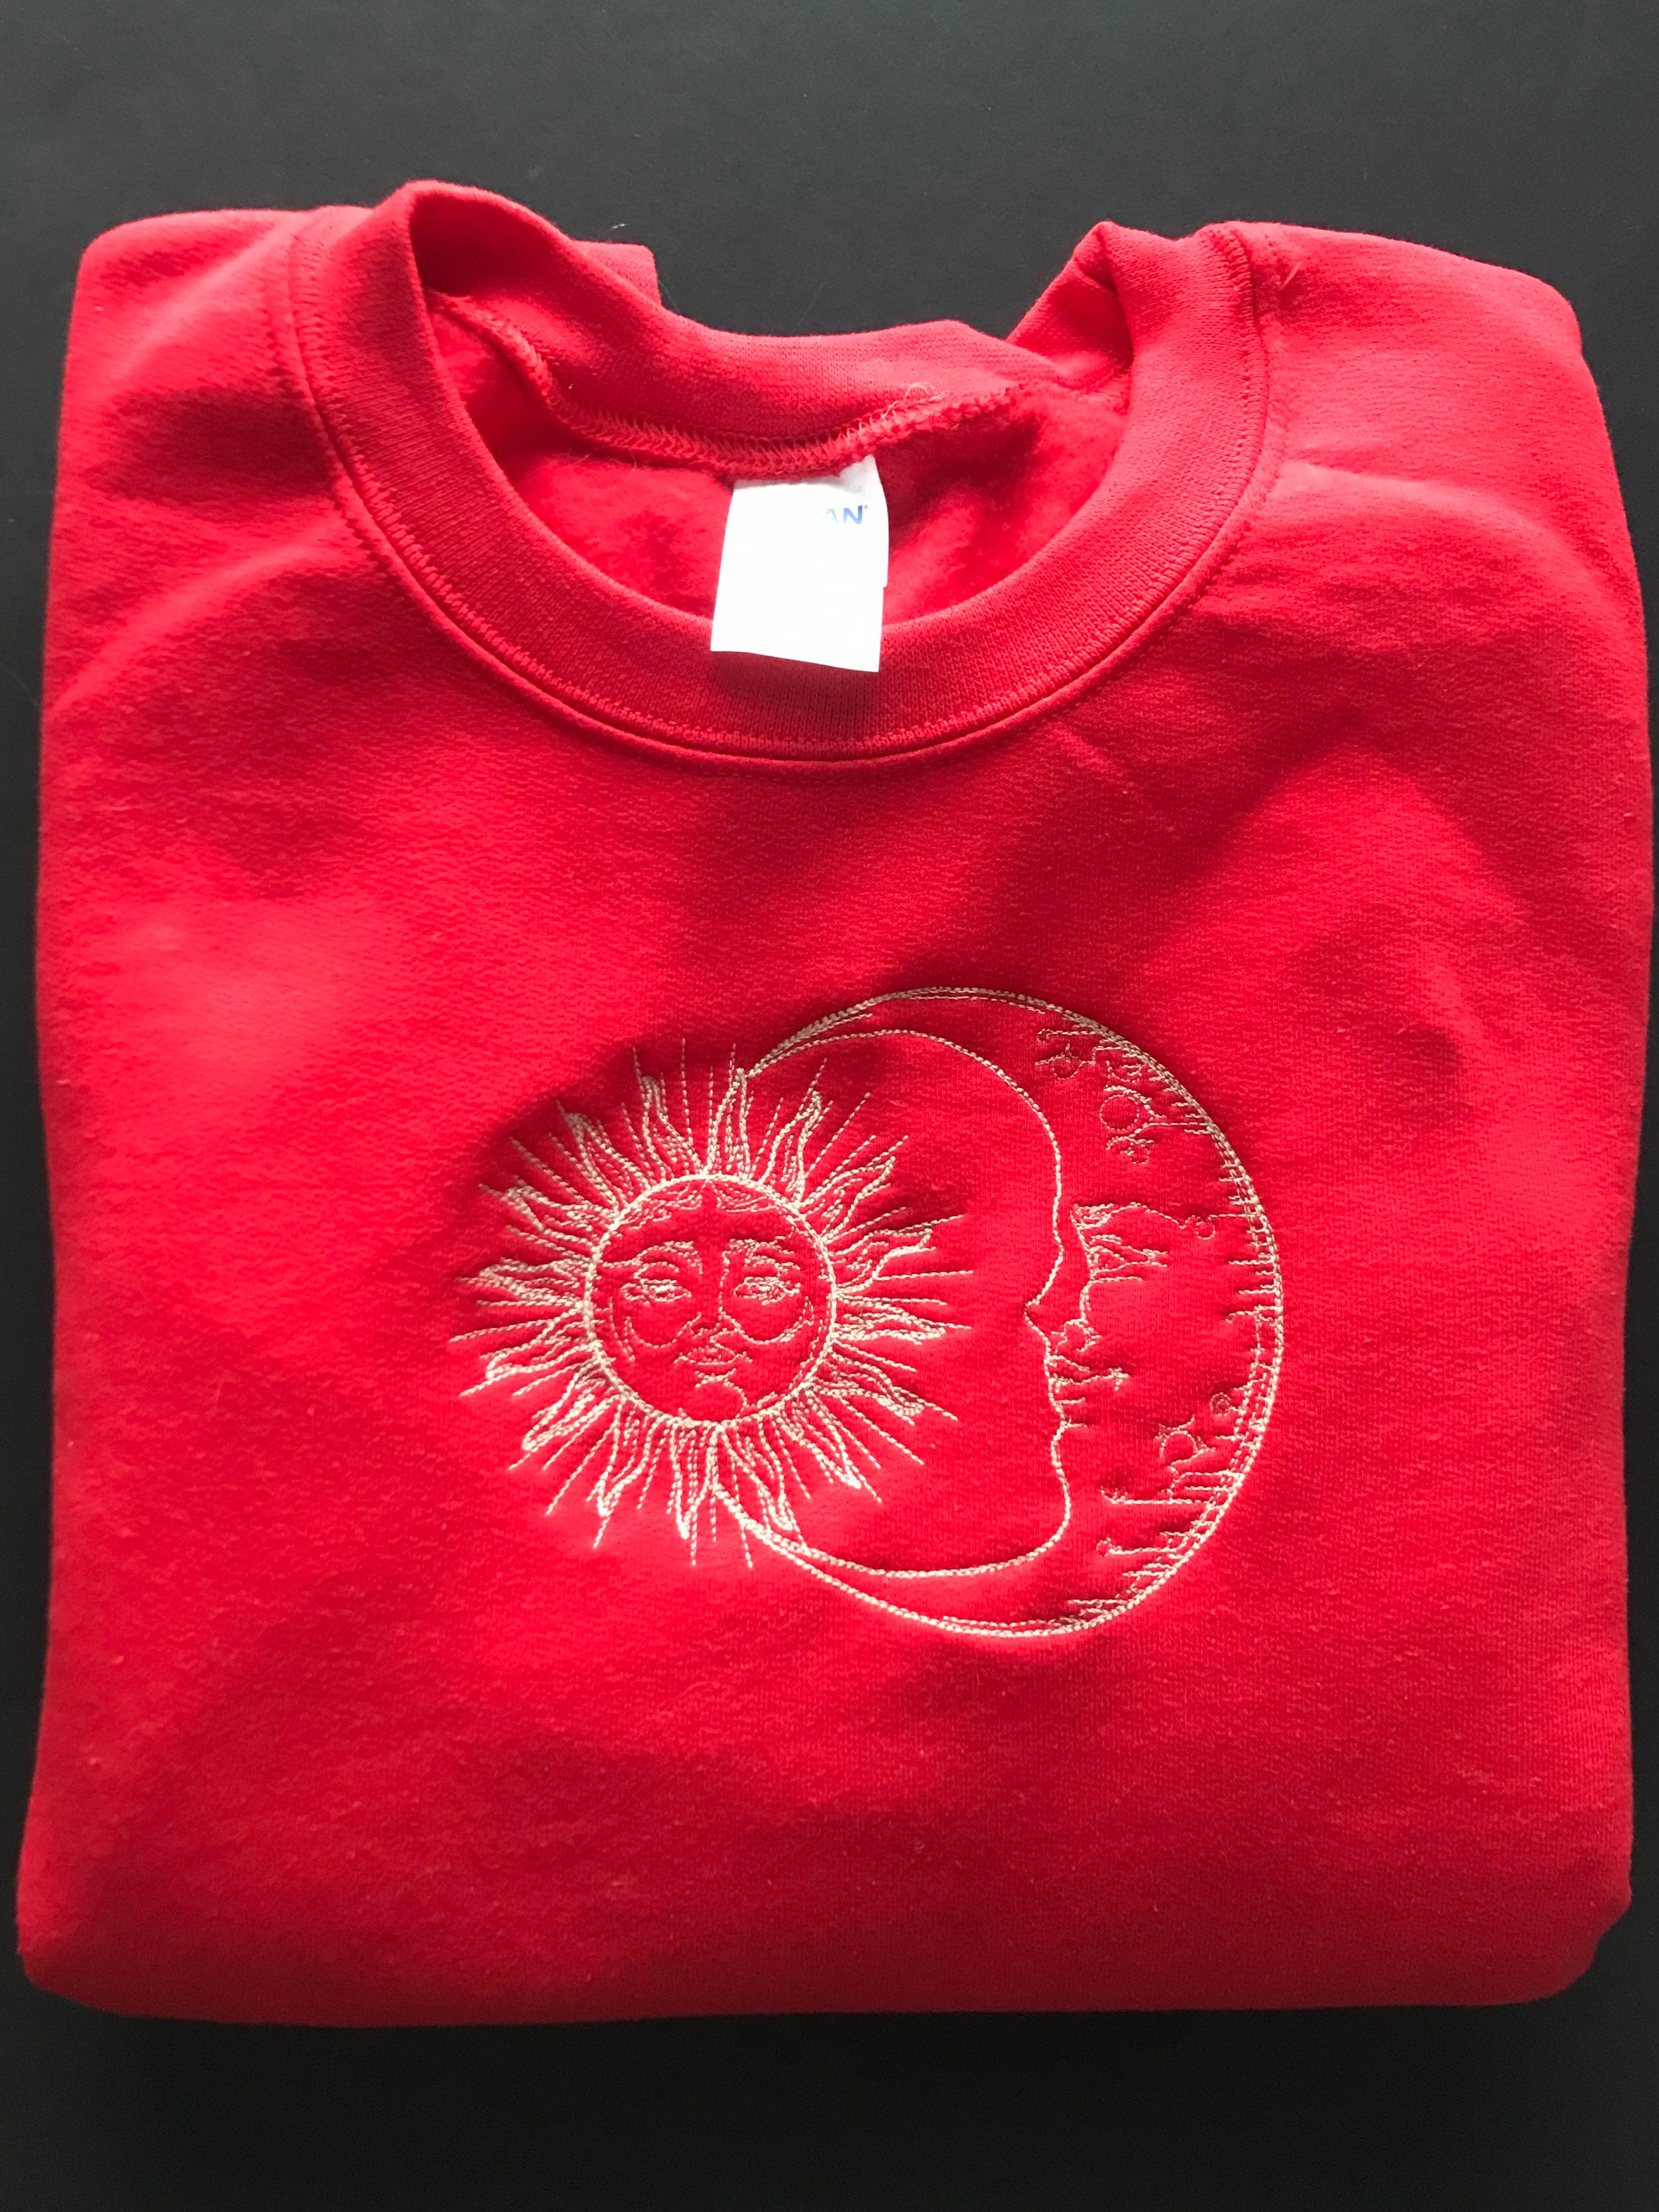 Embroidered Sweatshirt Sun and Moon design | Etsy